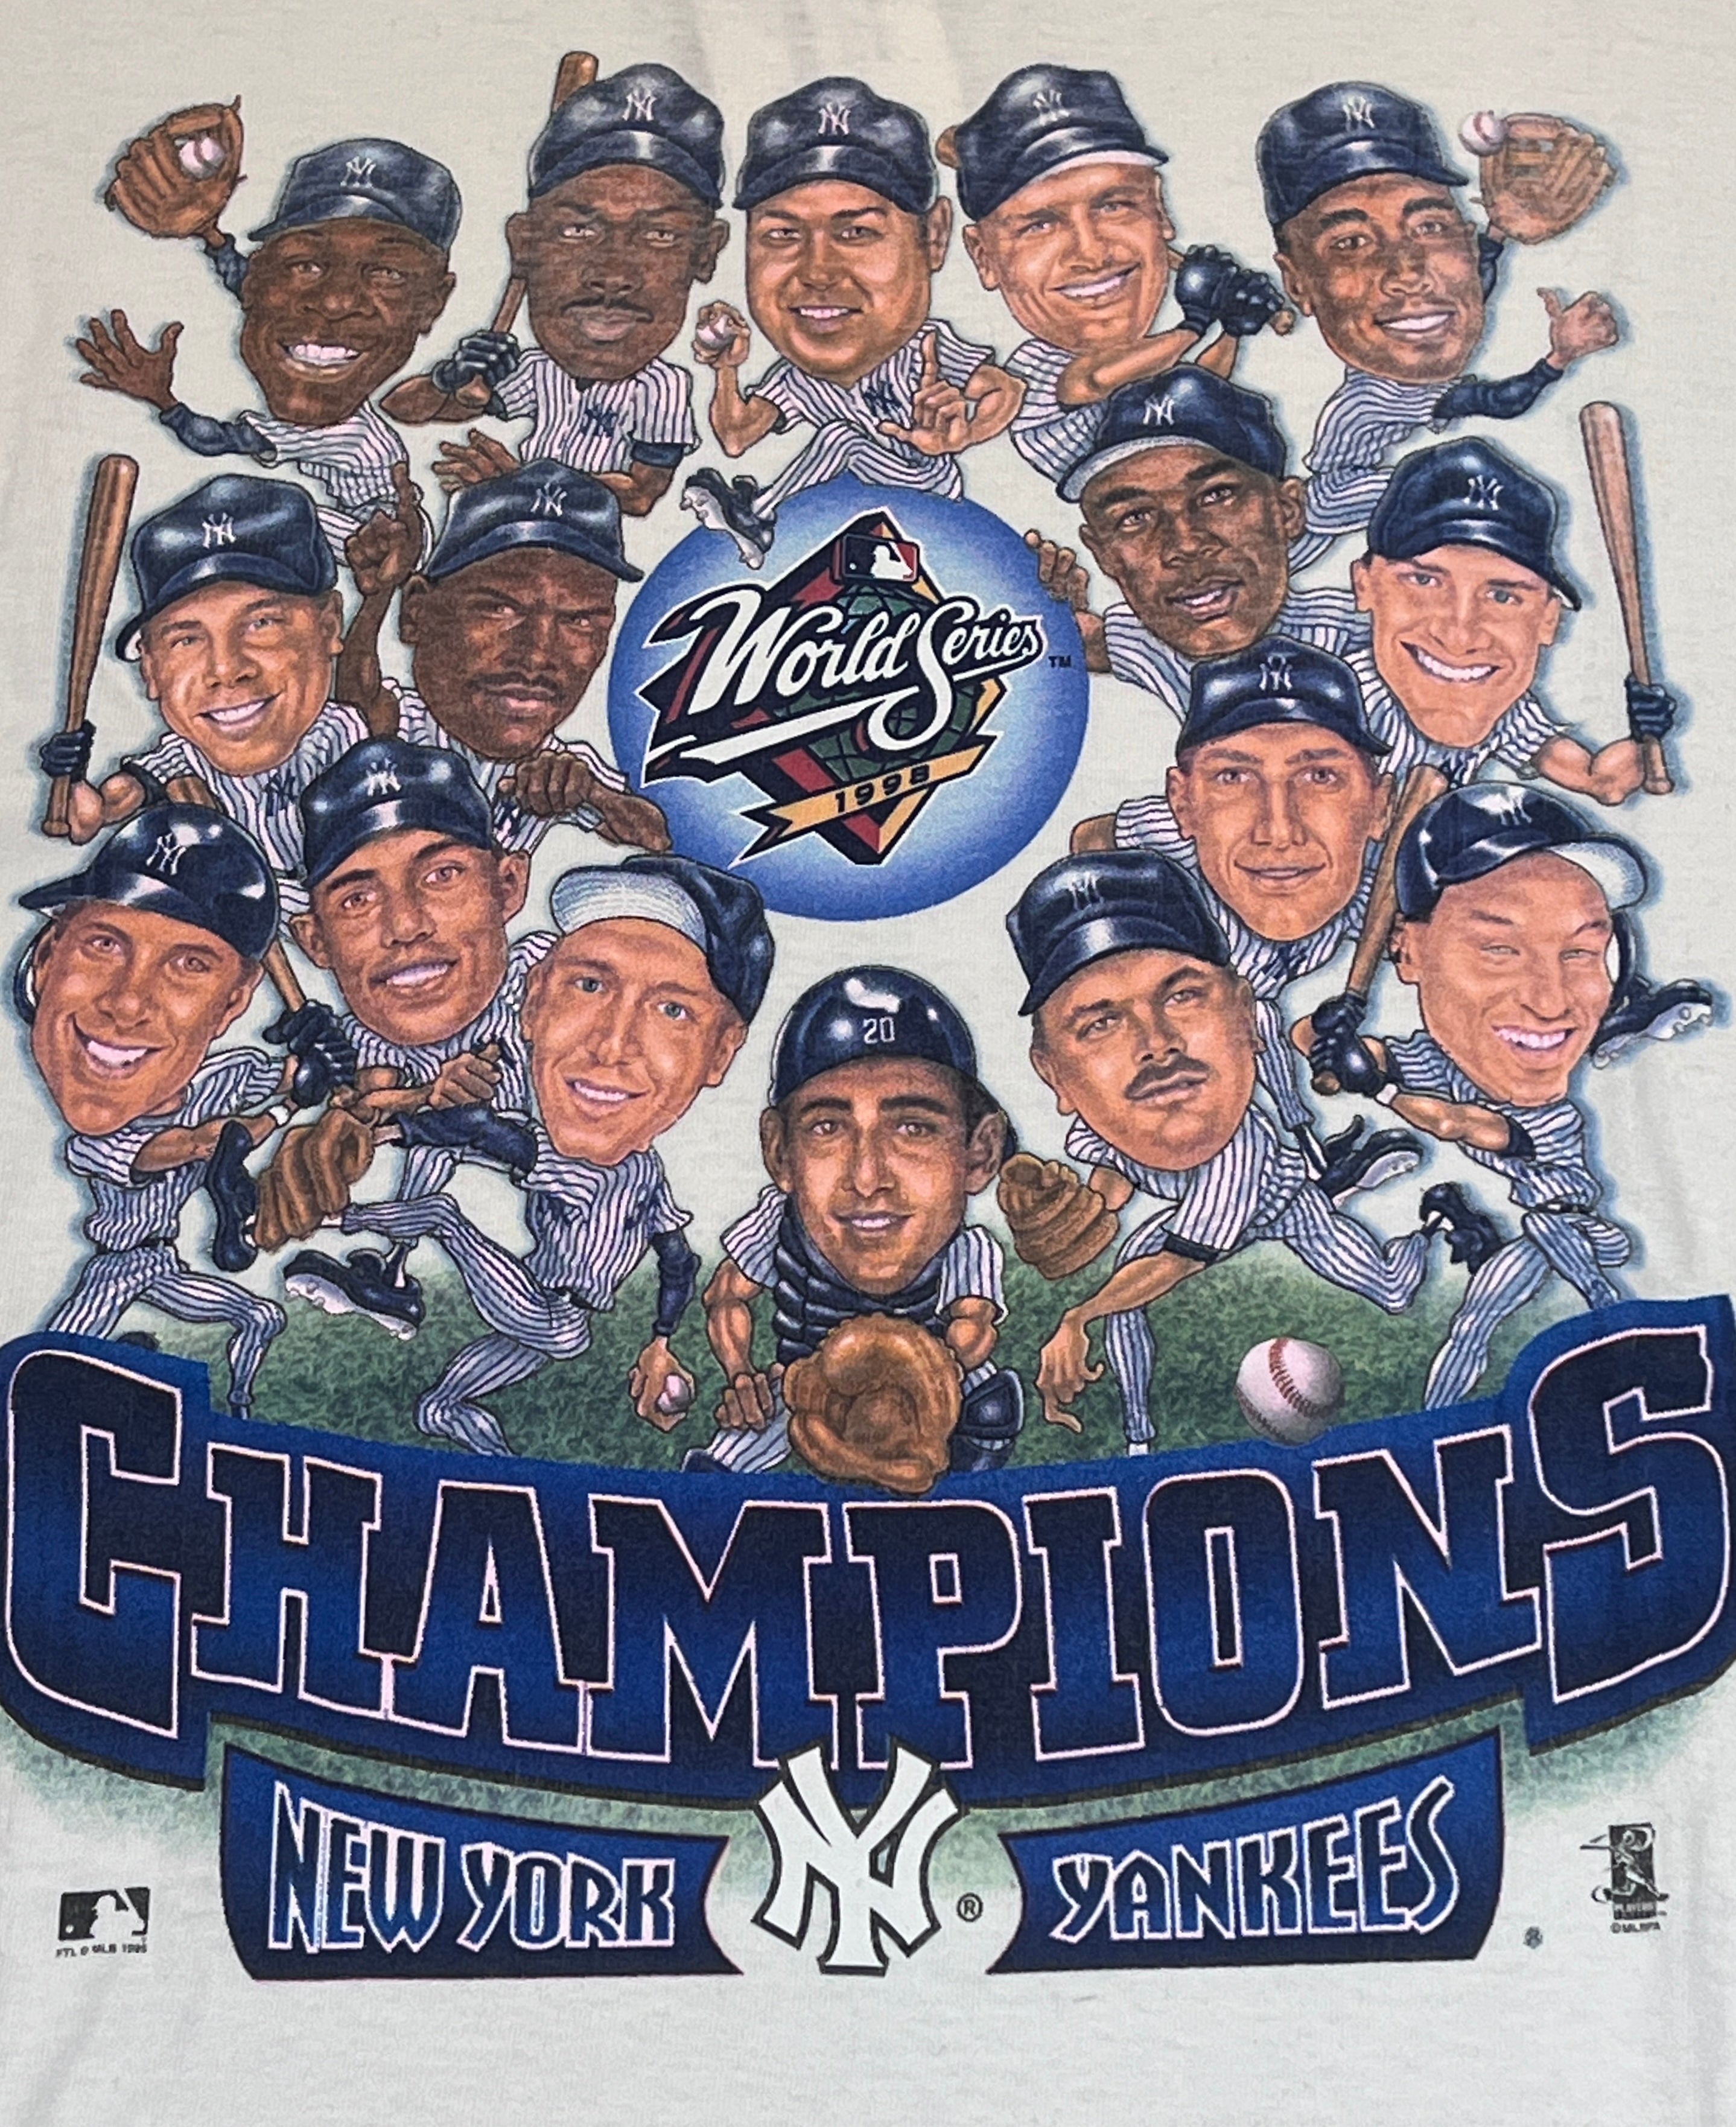 Vintage NY Yankees 98 World Series champs xl t shirt